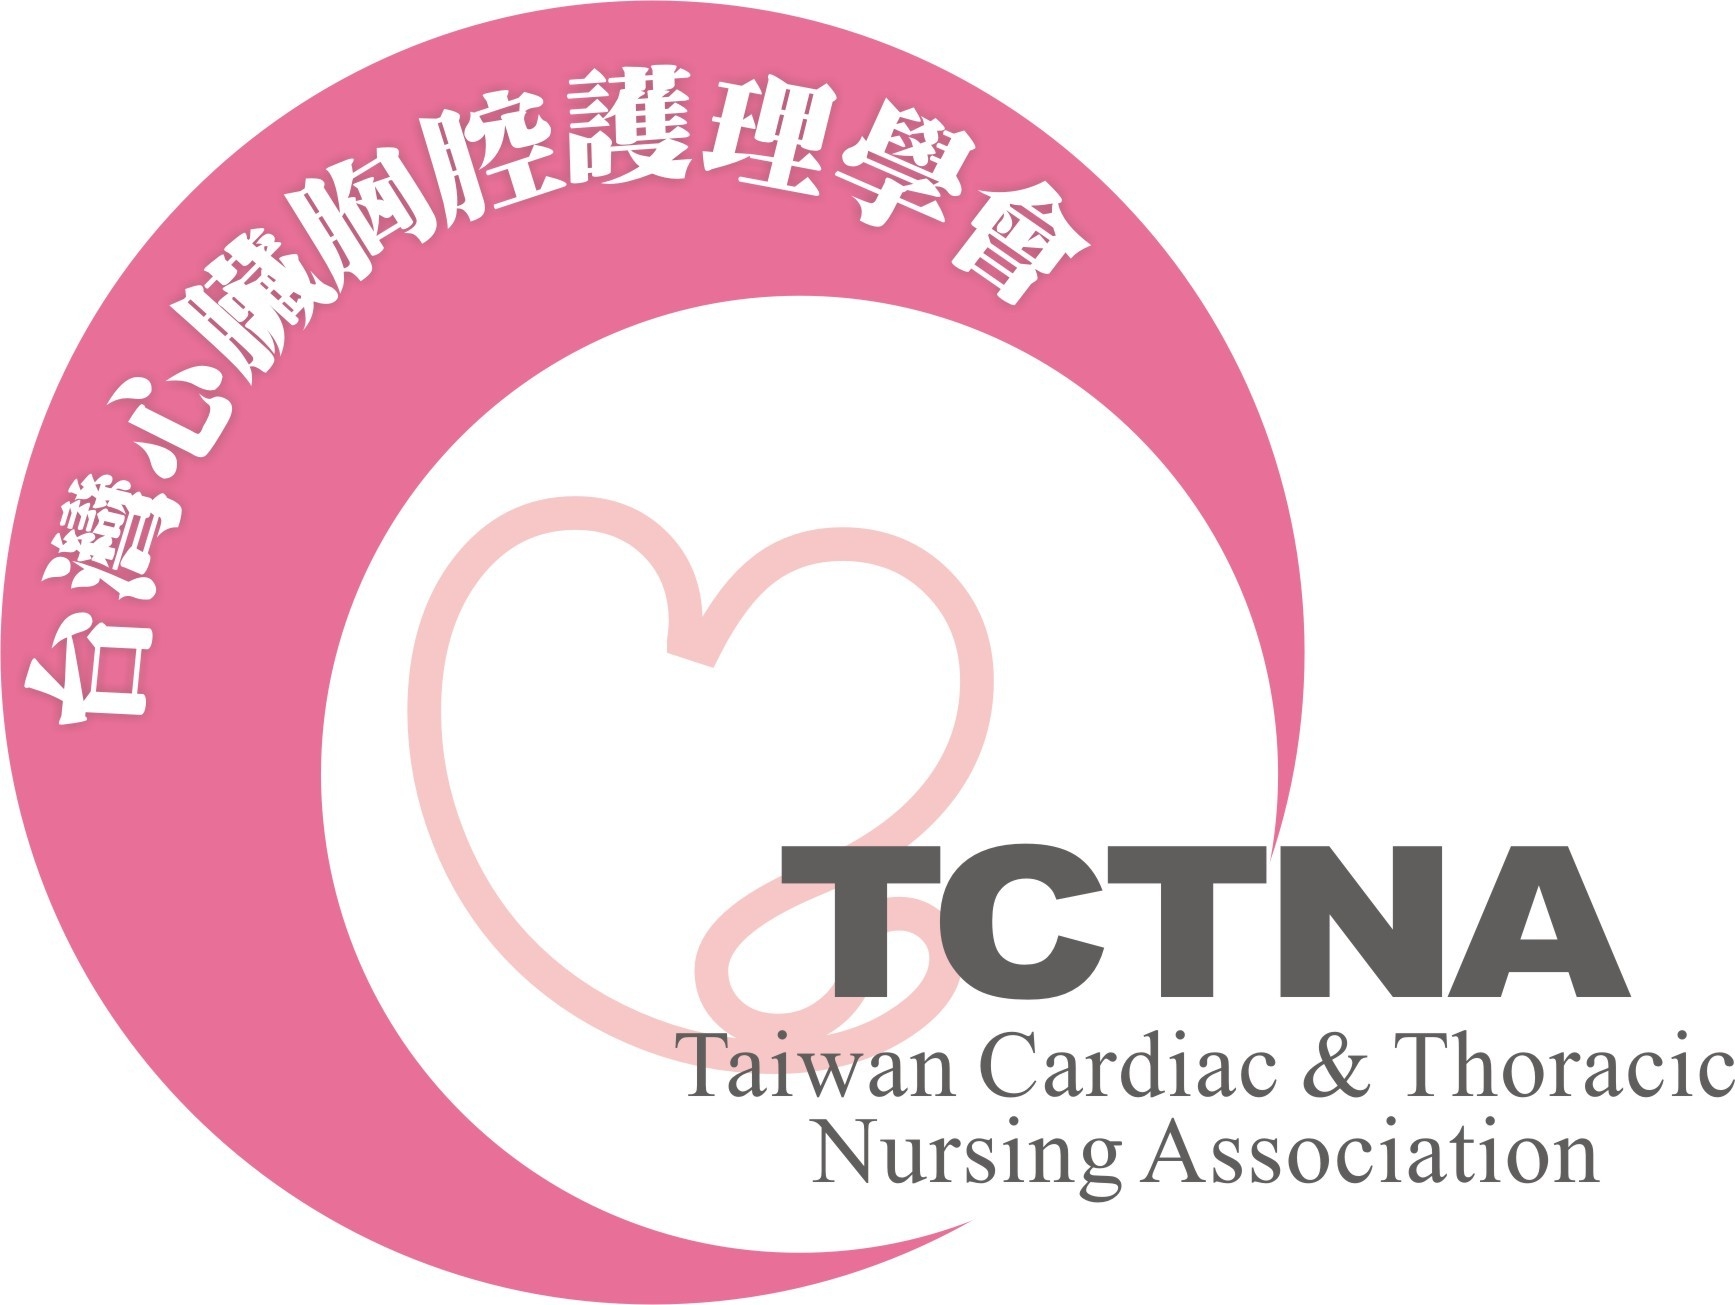 Taiwan Cardiac & Thoracic Nursing Association Logo